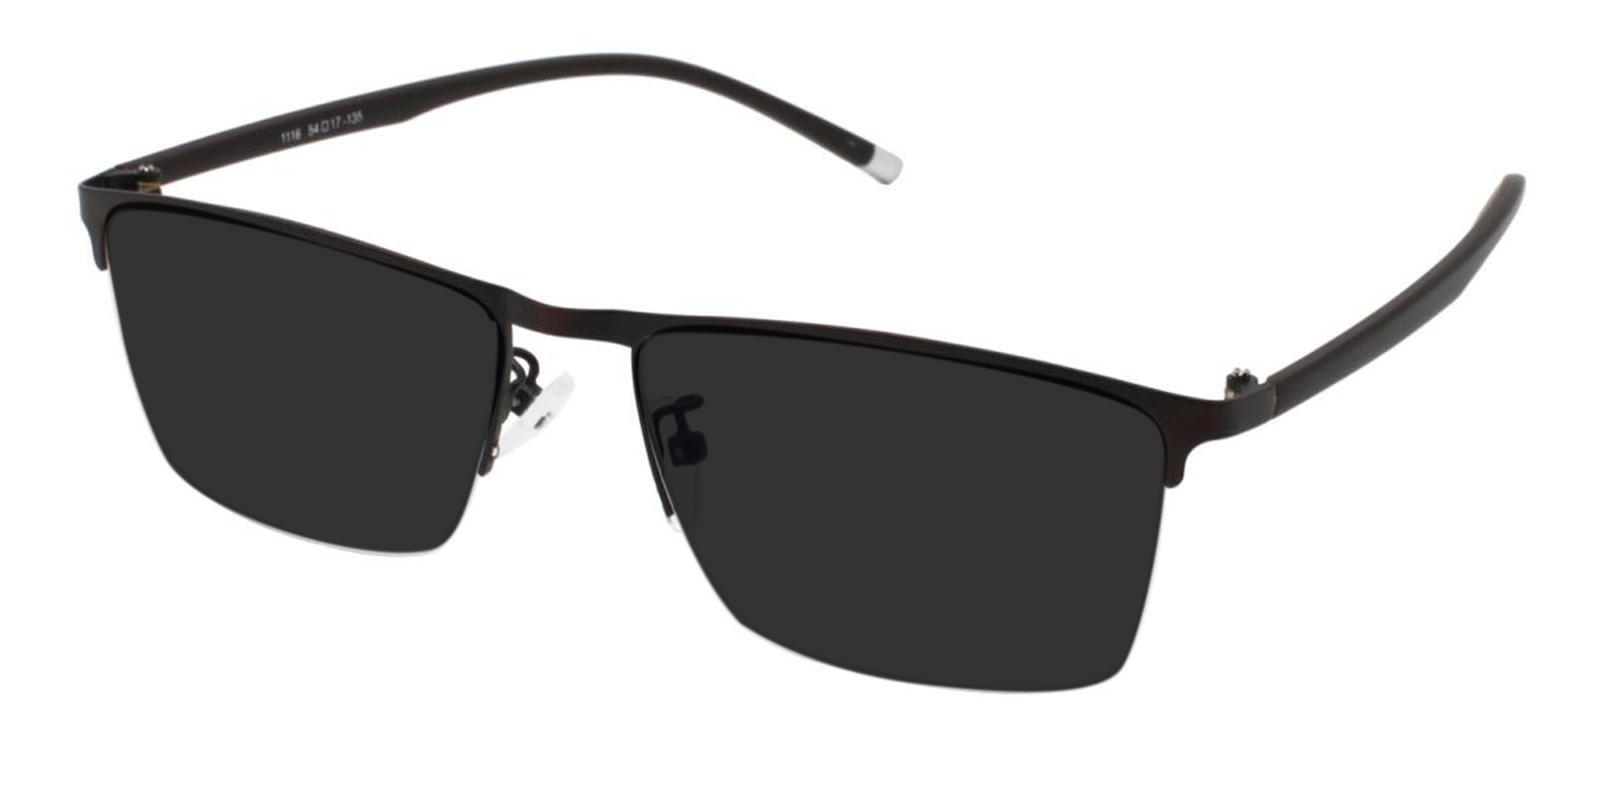 Allure Gun Metal Sunglasses , NosePads Frames from ABBE Glasses